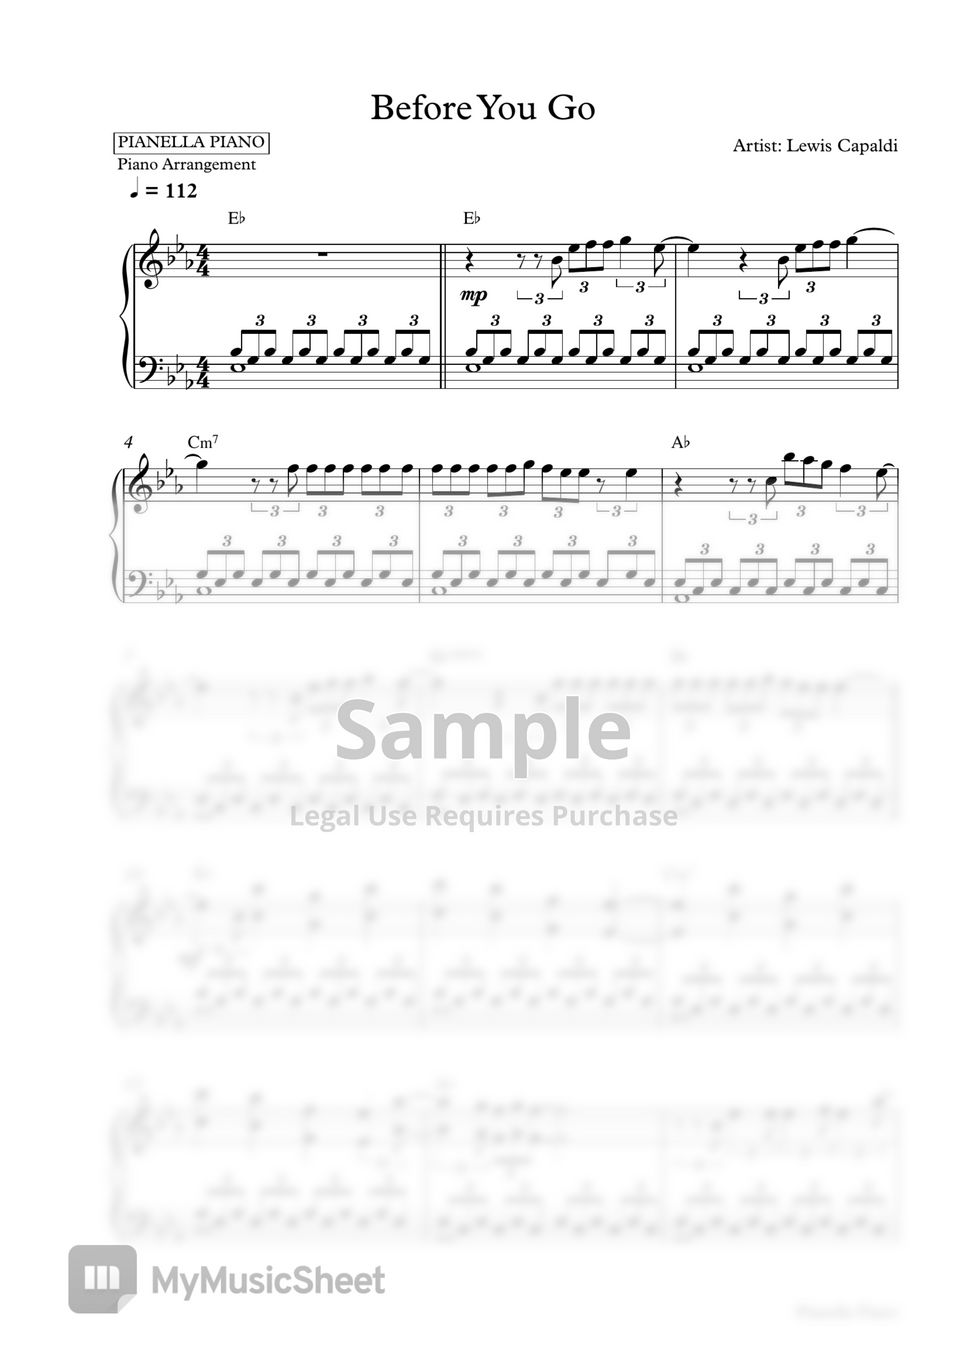 Lewis Capaldi - Before You Go (Piano Sheet) by Pianella Piano